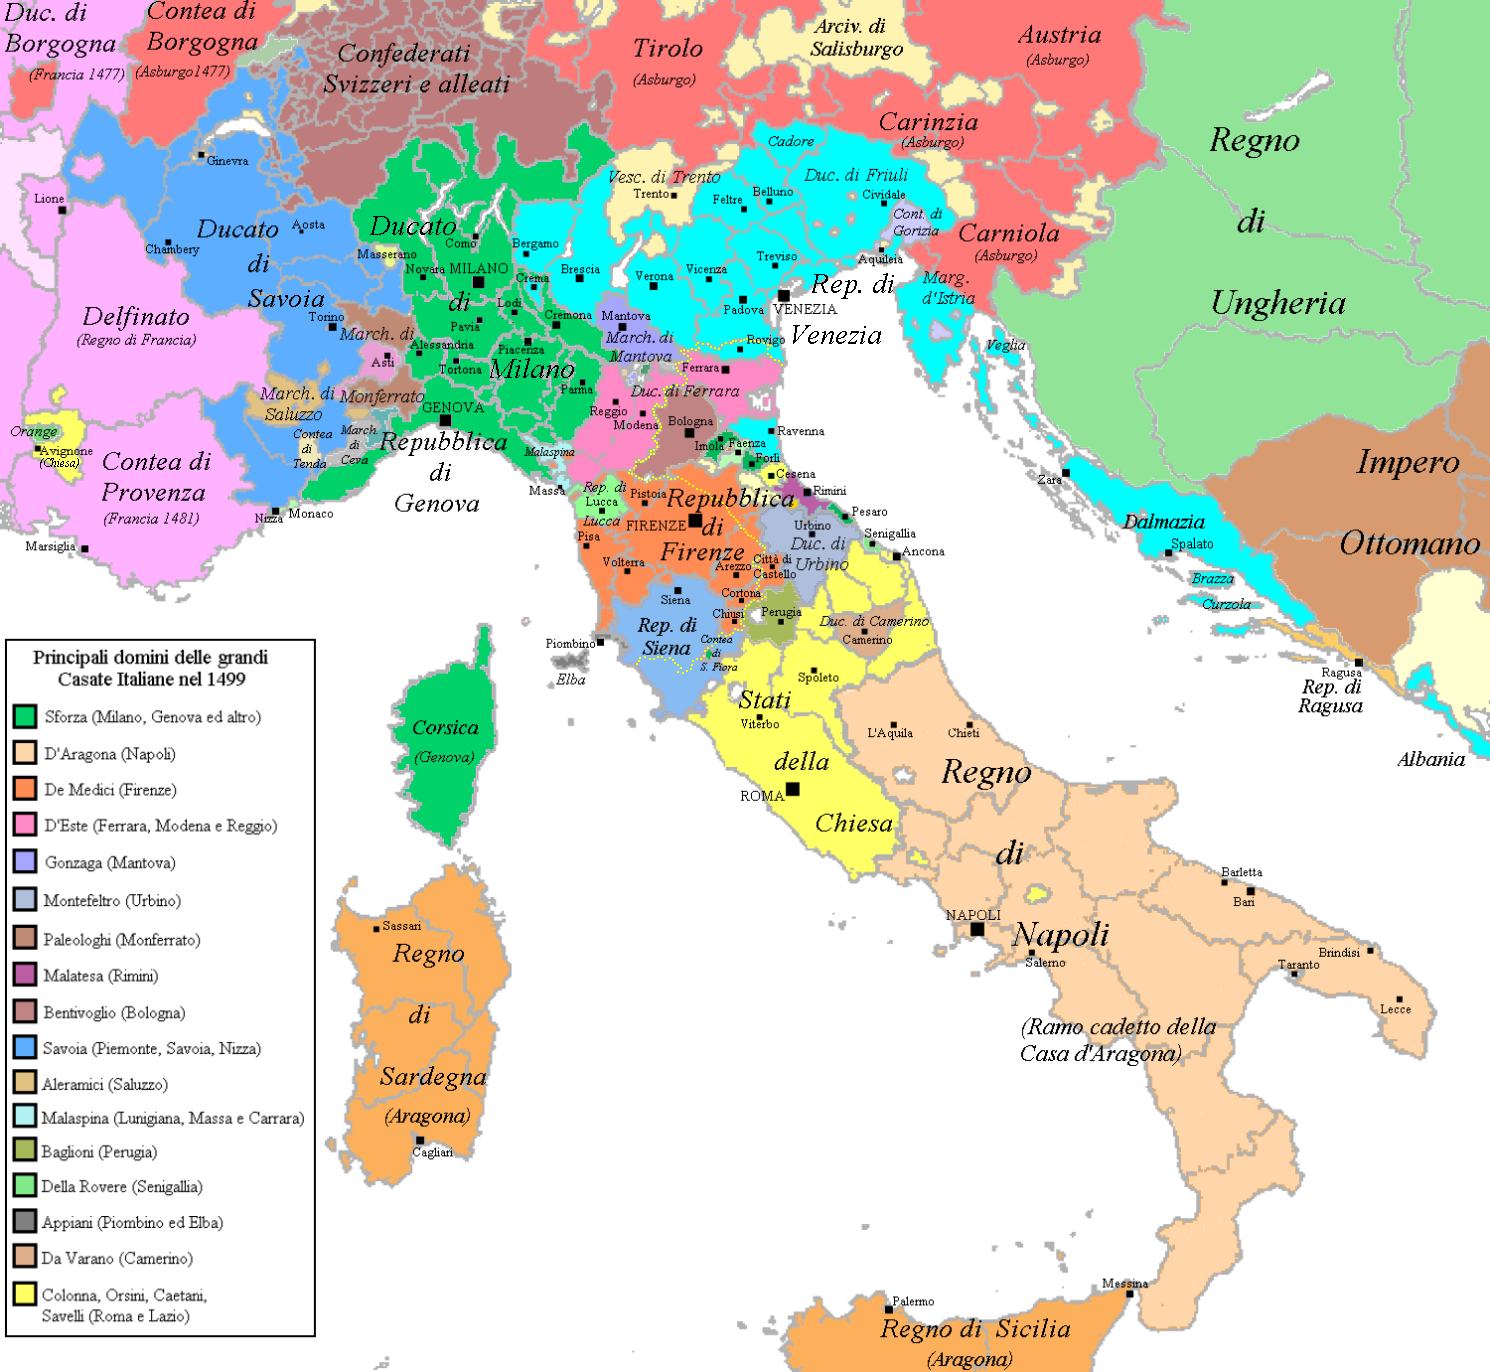 Italian kingdoms 1499 (by kayac CC BY-SA 3.0 Wikimedia Commons)